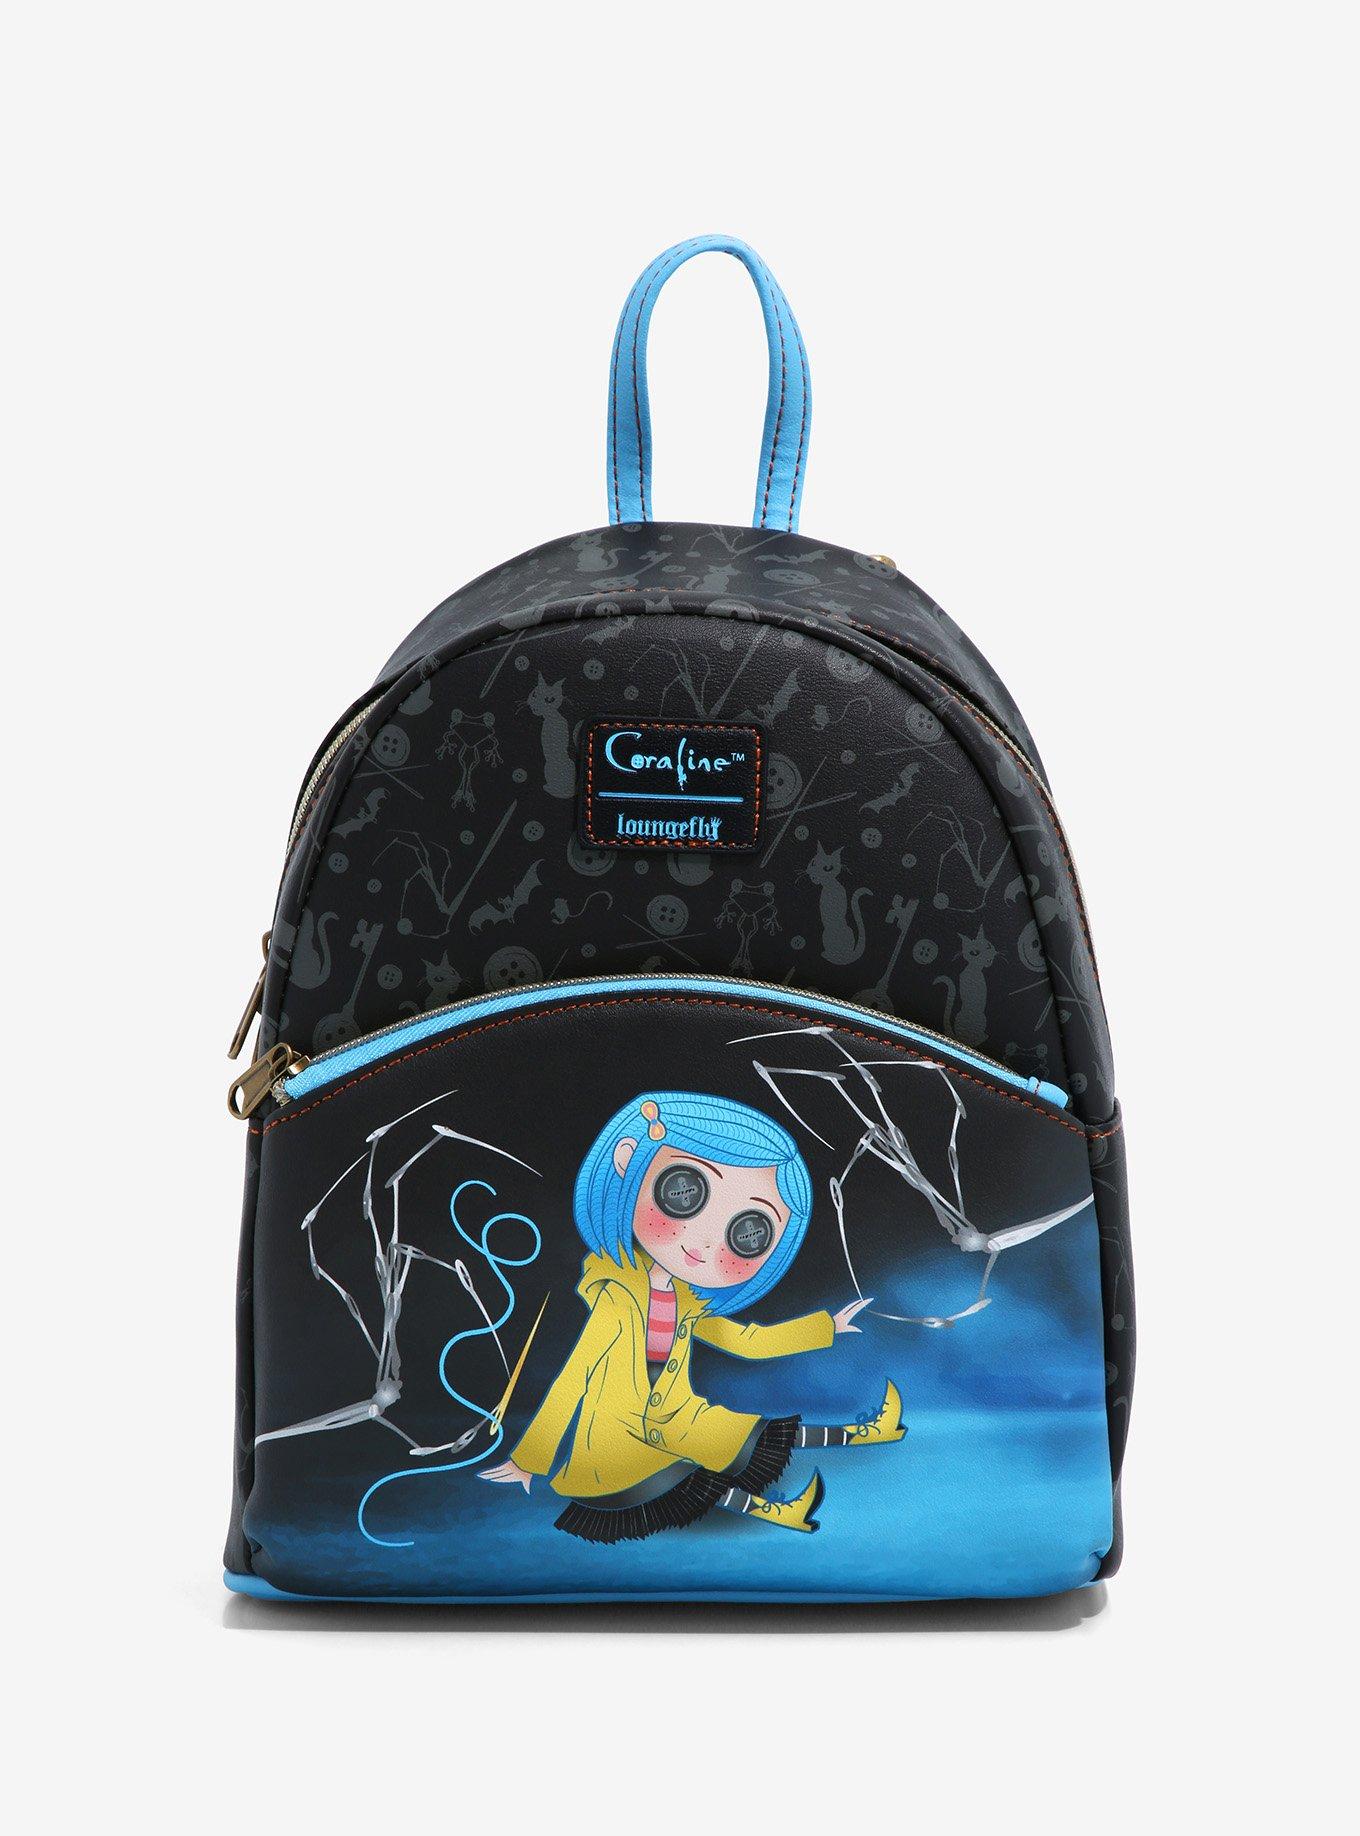 Loungefly Coraline mini backpack www.ugel01ep.gob.pe